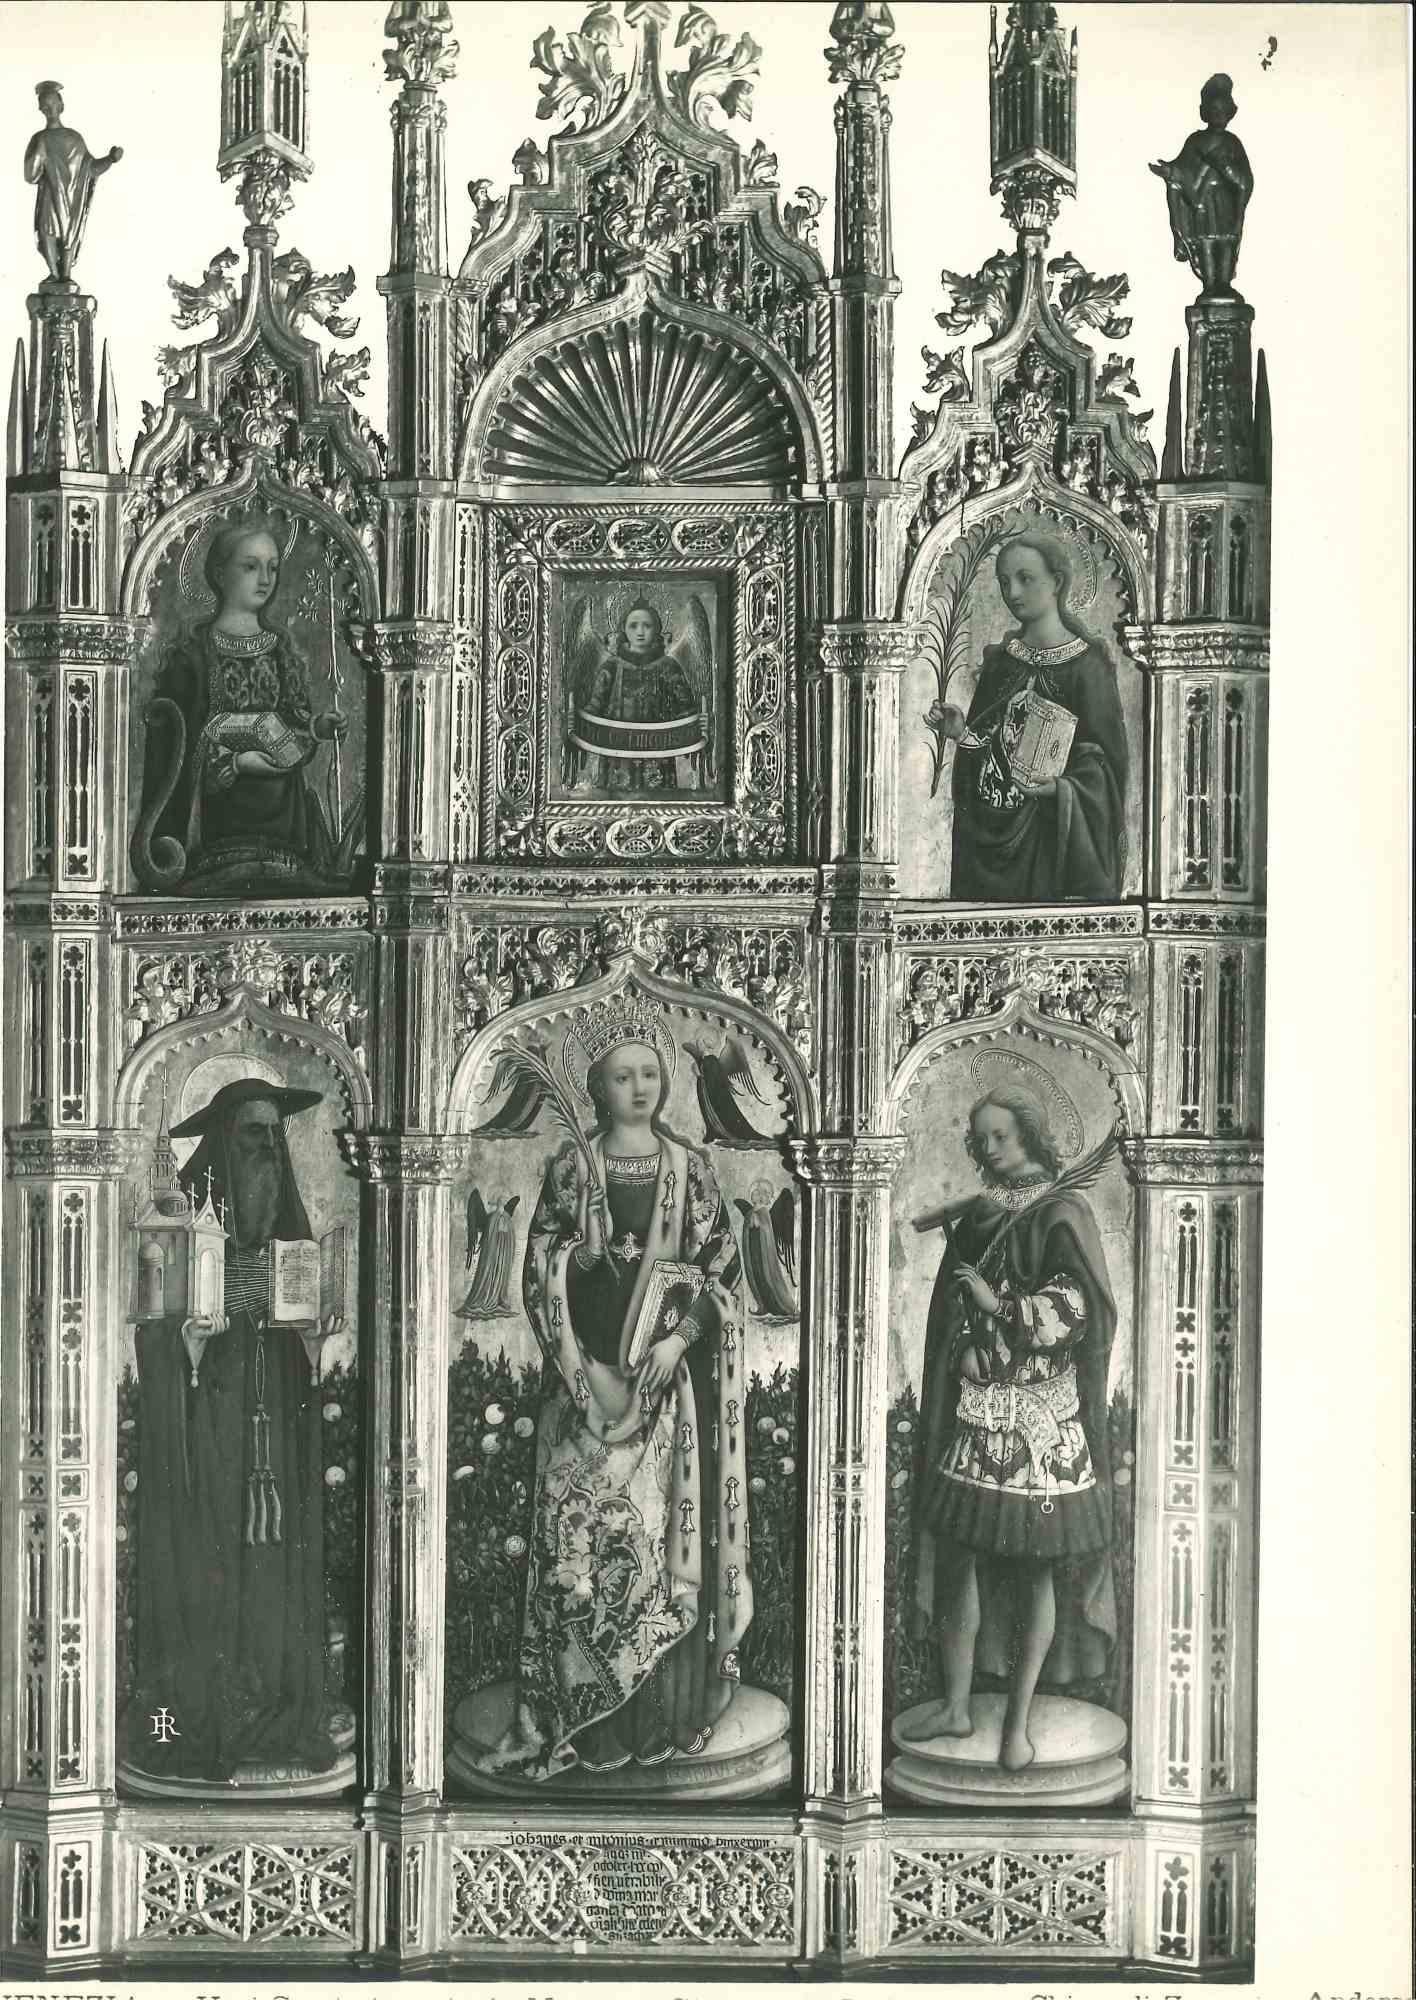 Unknown Figurative Photograph - Architecture and Art Photo - S. Zachary Church - Venice - 1920s